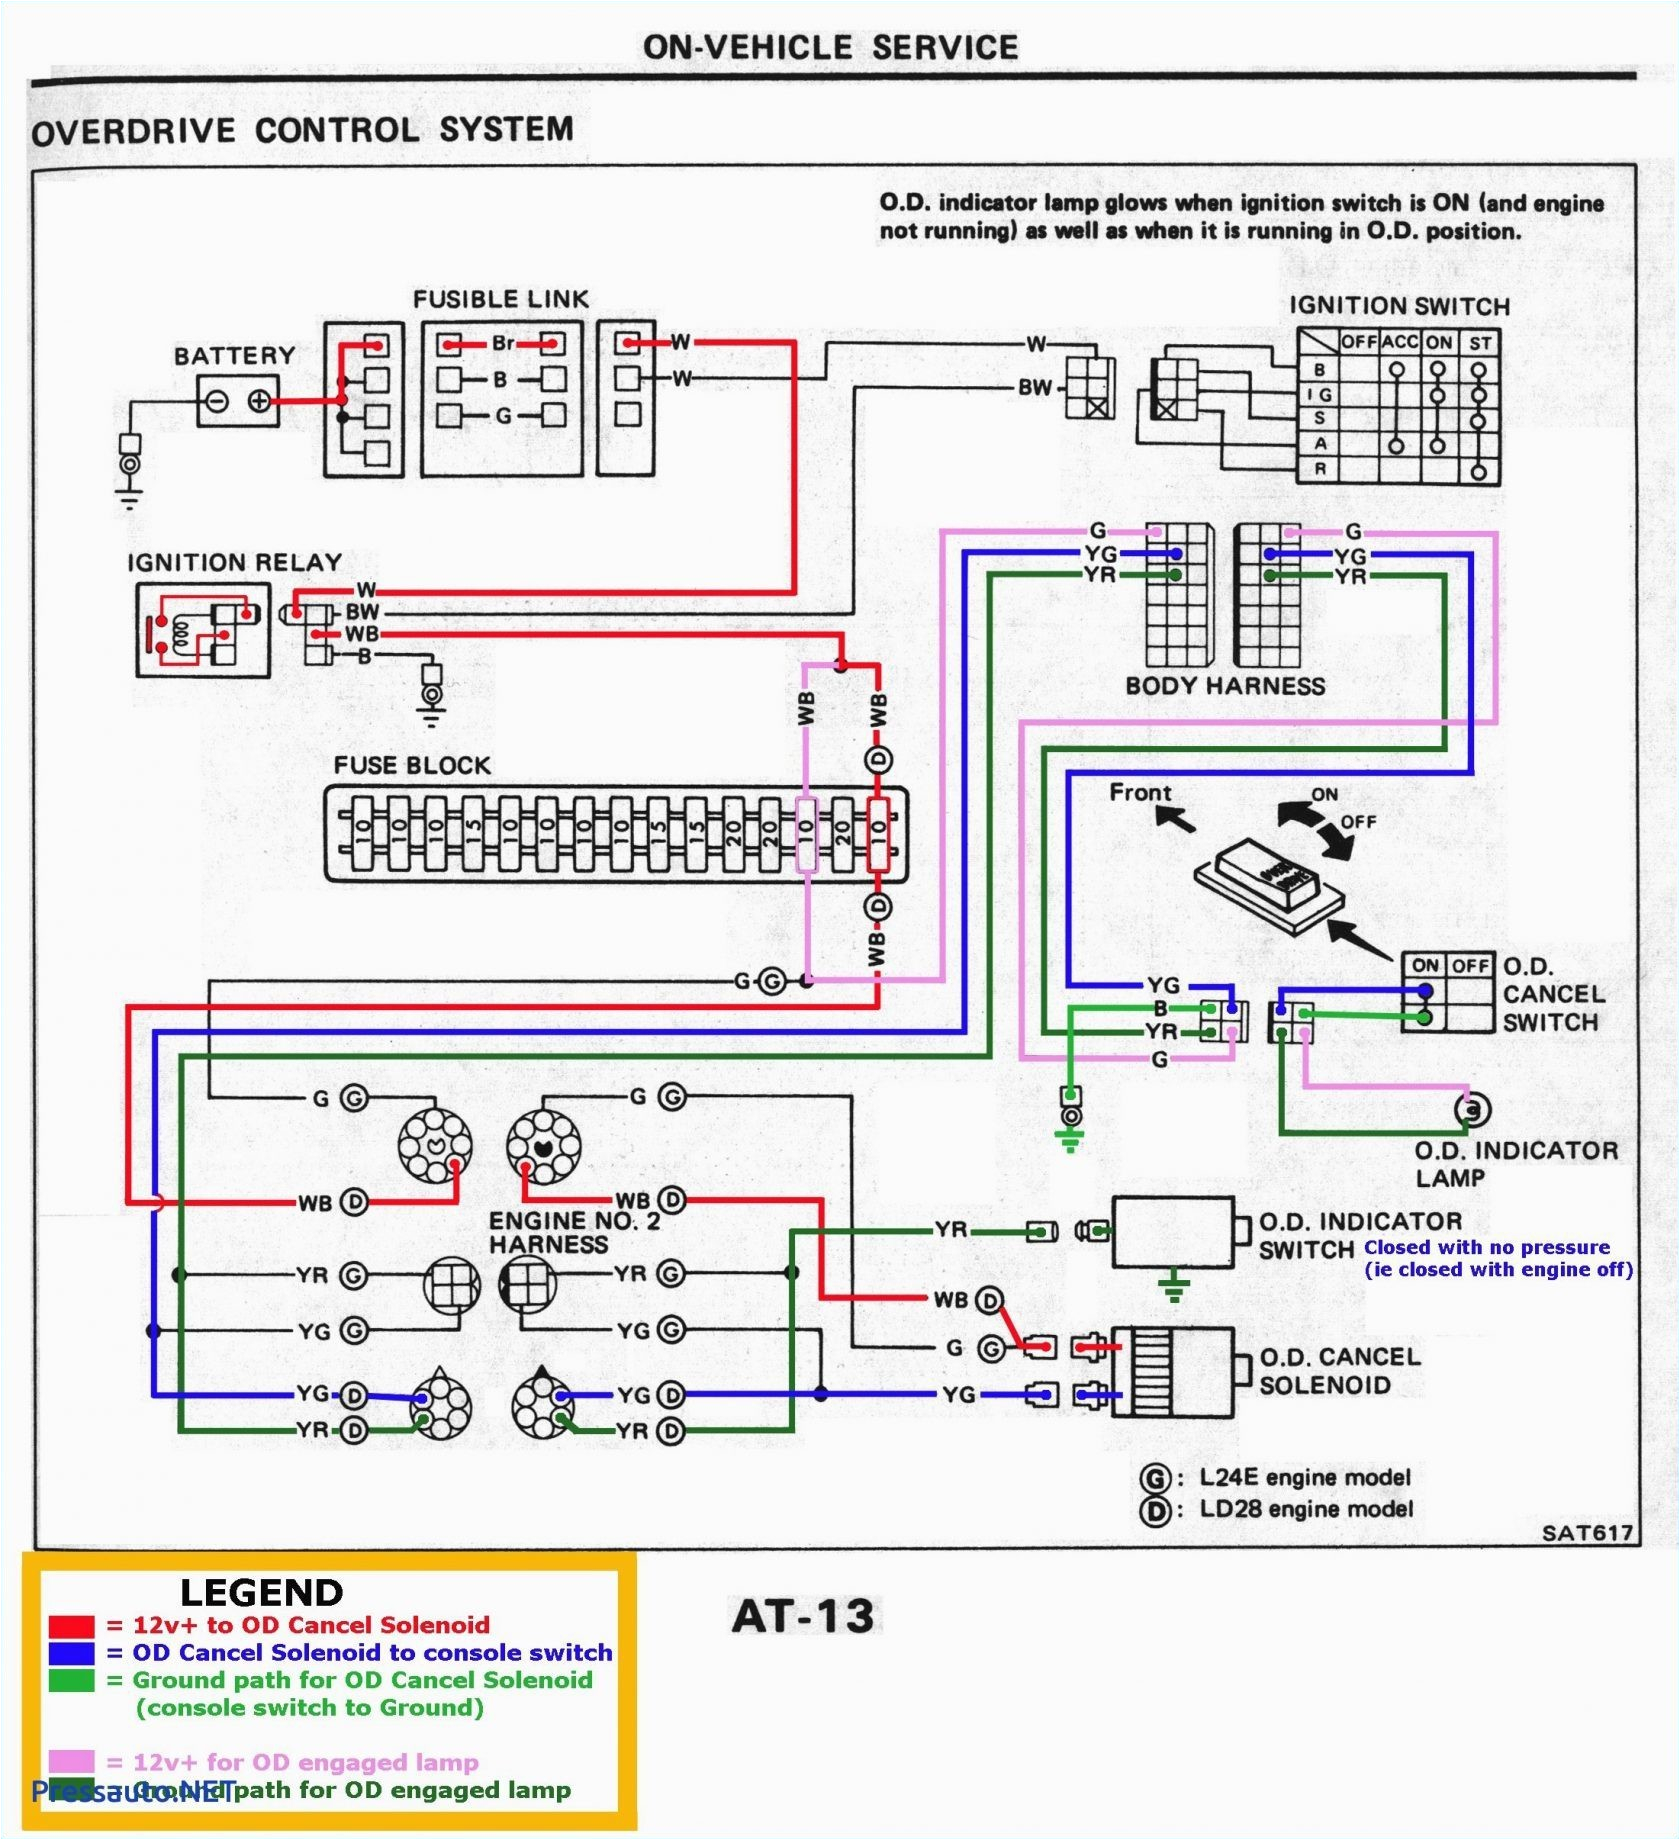 Honda Civic Fuel Injector Wiring Diagram Fuel Injector Diagram 97 Honda Civic Fuses Wiring Diagram Datasource